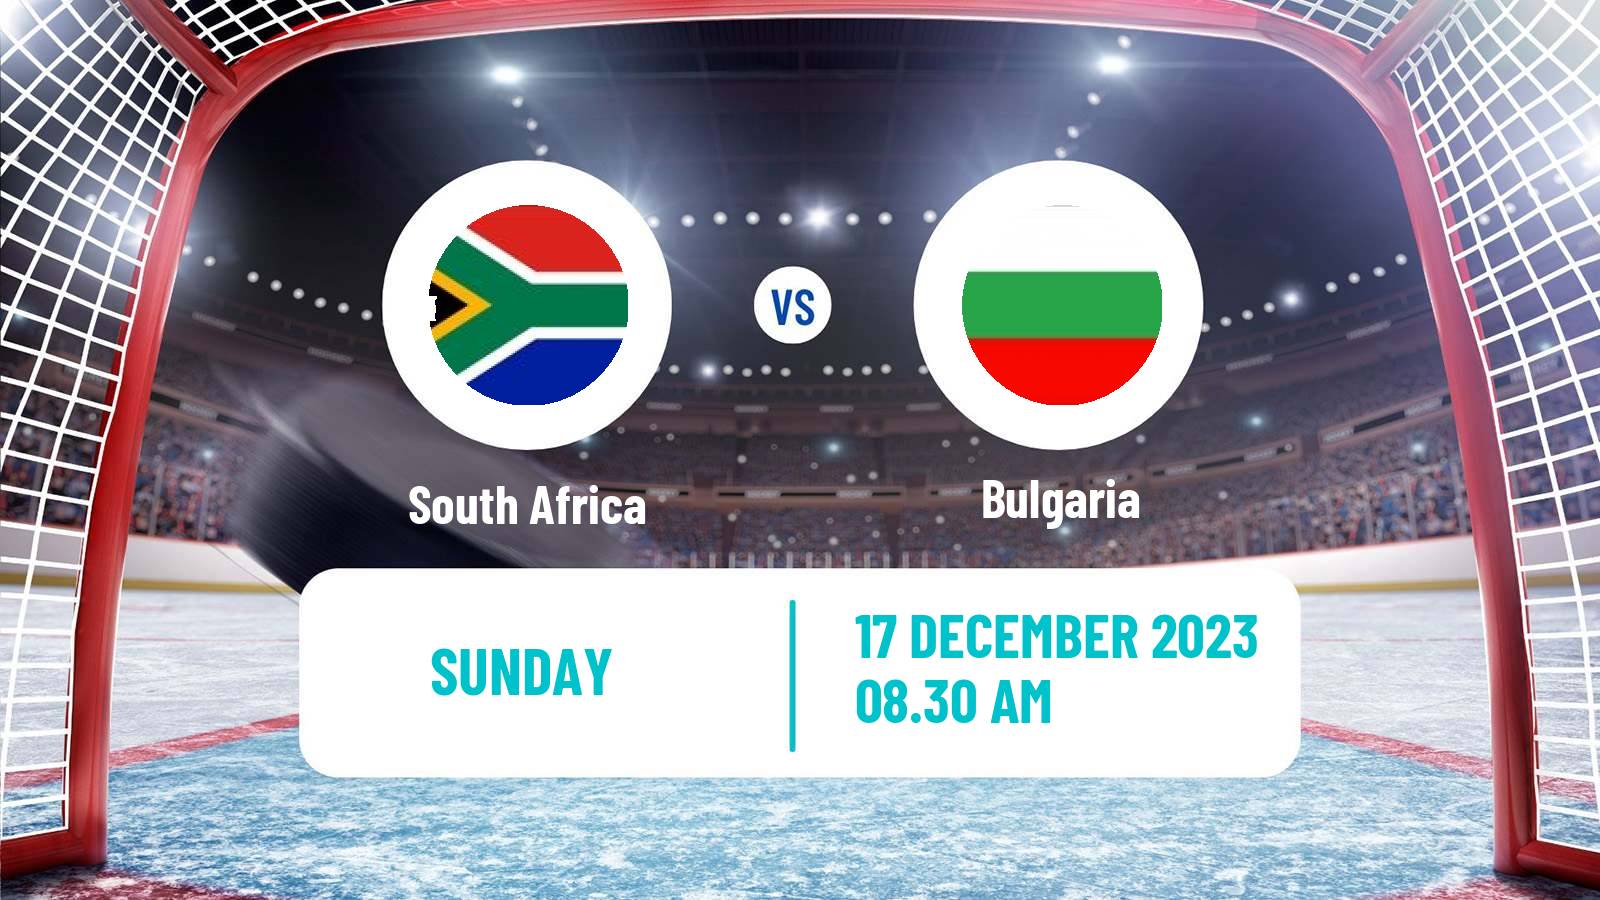 Hockey Winter Olympic Games - Ice Hockey South Africa - Bulgaria